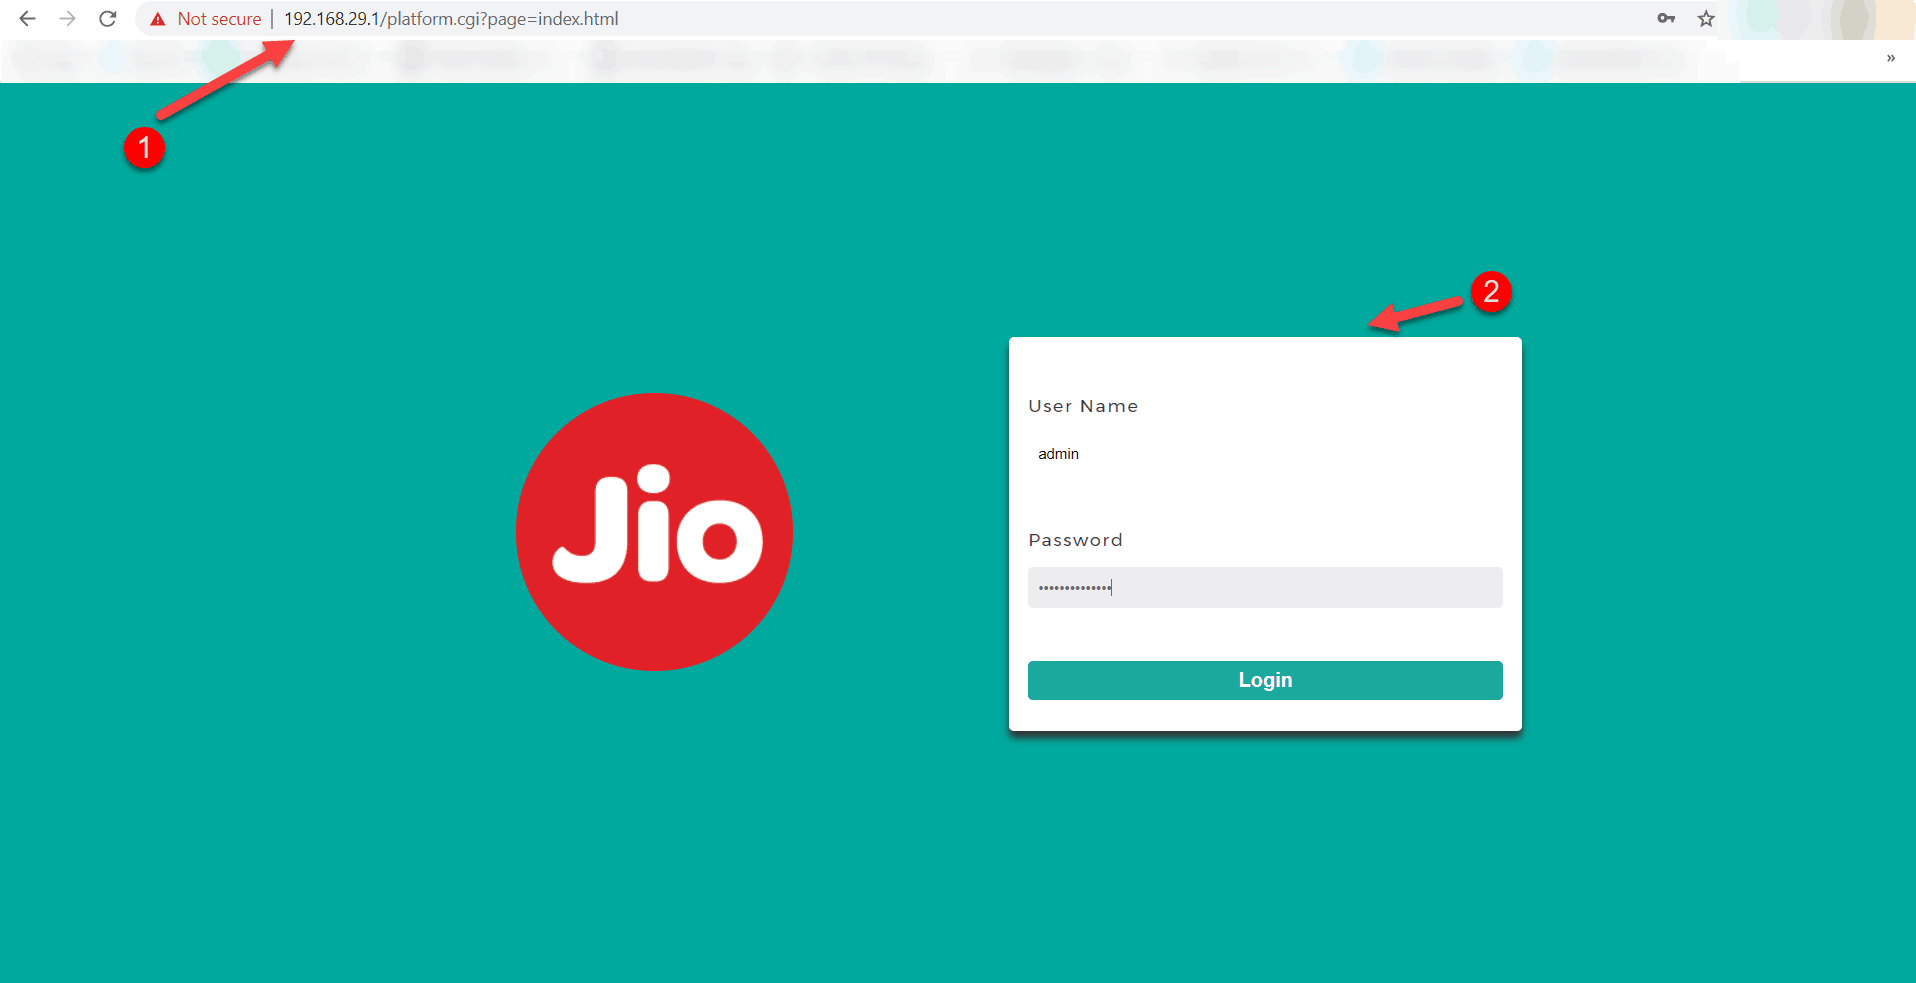 jio giga fiber router login page using IP